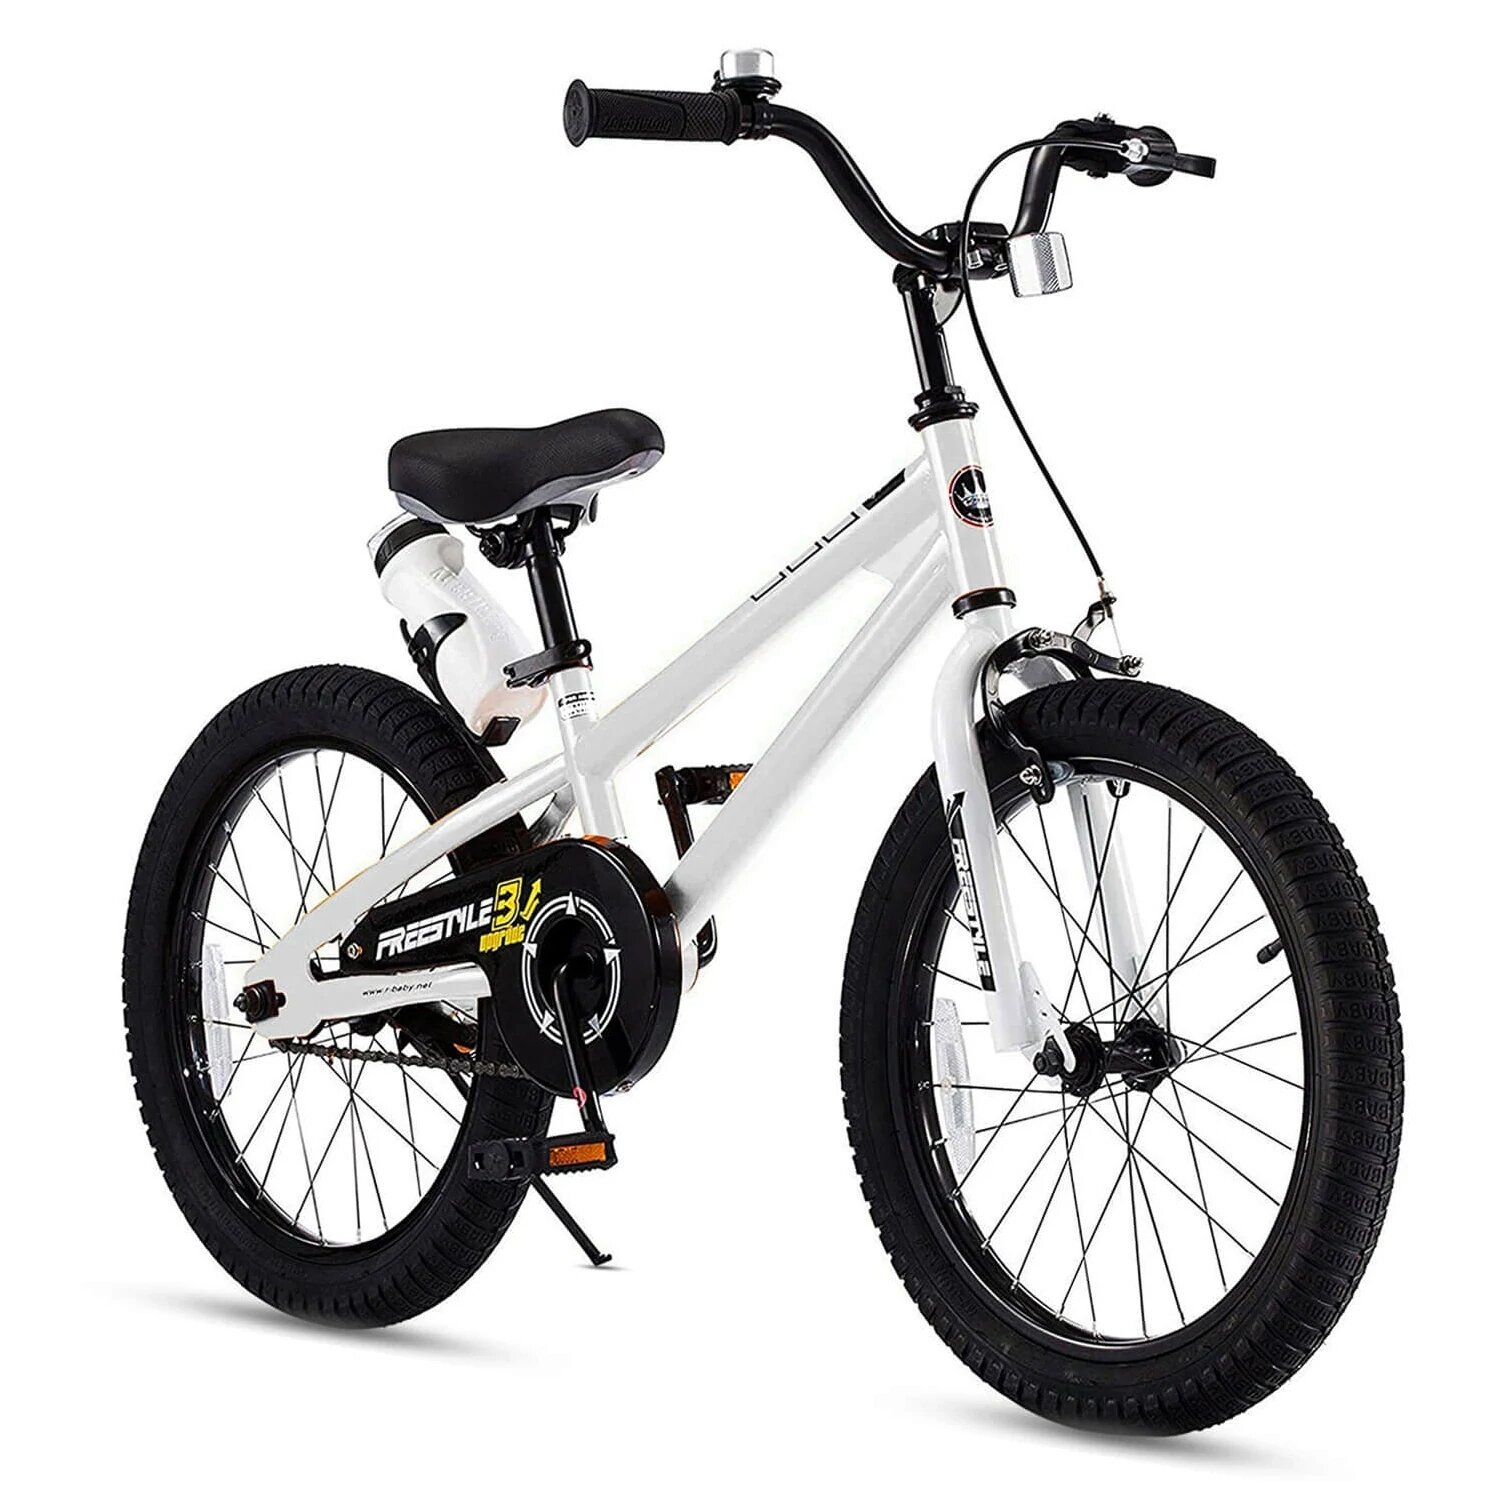 [EU Direct] RoyalBaby Freestyle kinderfiets 18 Inch Kids Bike BMX Stabilisatoren Loopfiets Jongens Meisjes Gift